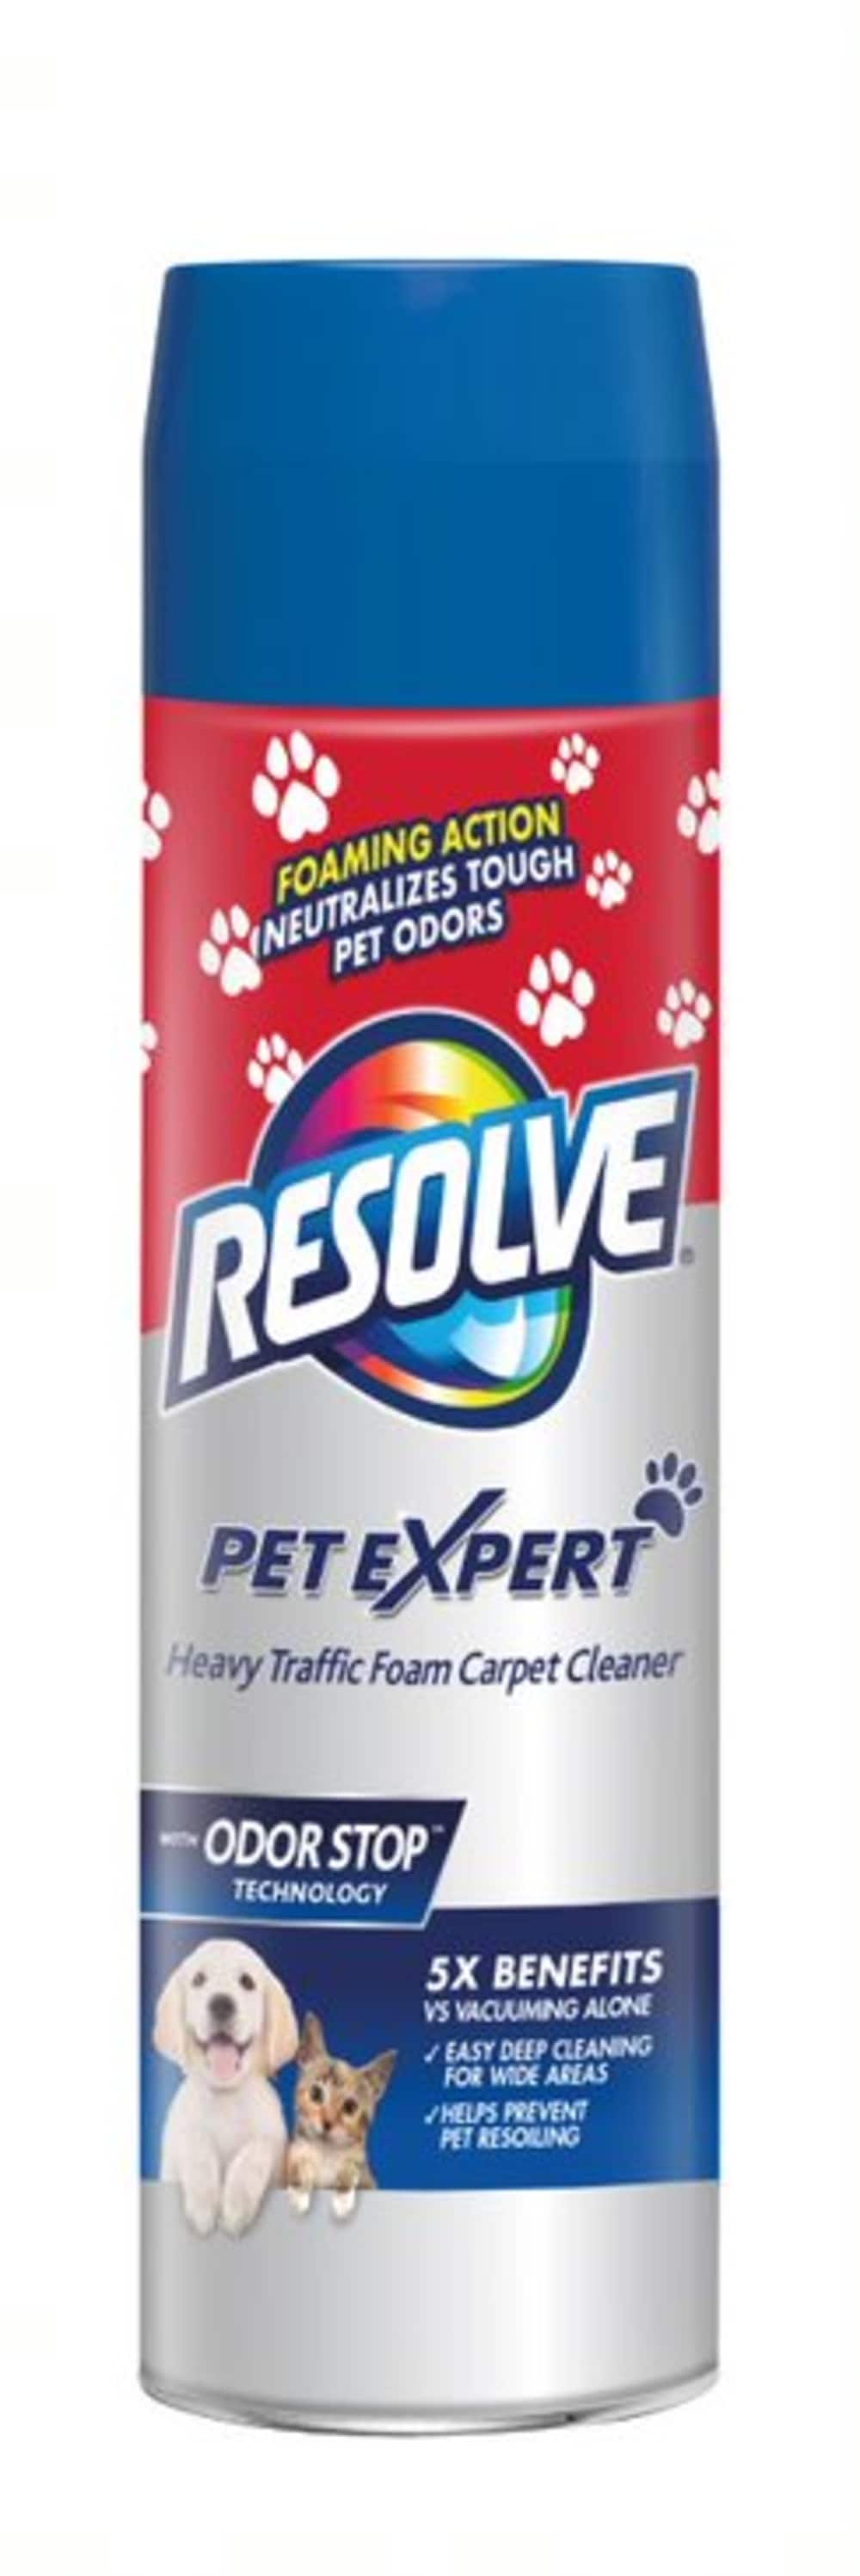  Resolve Pet Expert High Traffic, Carpet Foam, 22 Oz(3 Pack) :  Health & Household